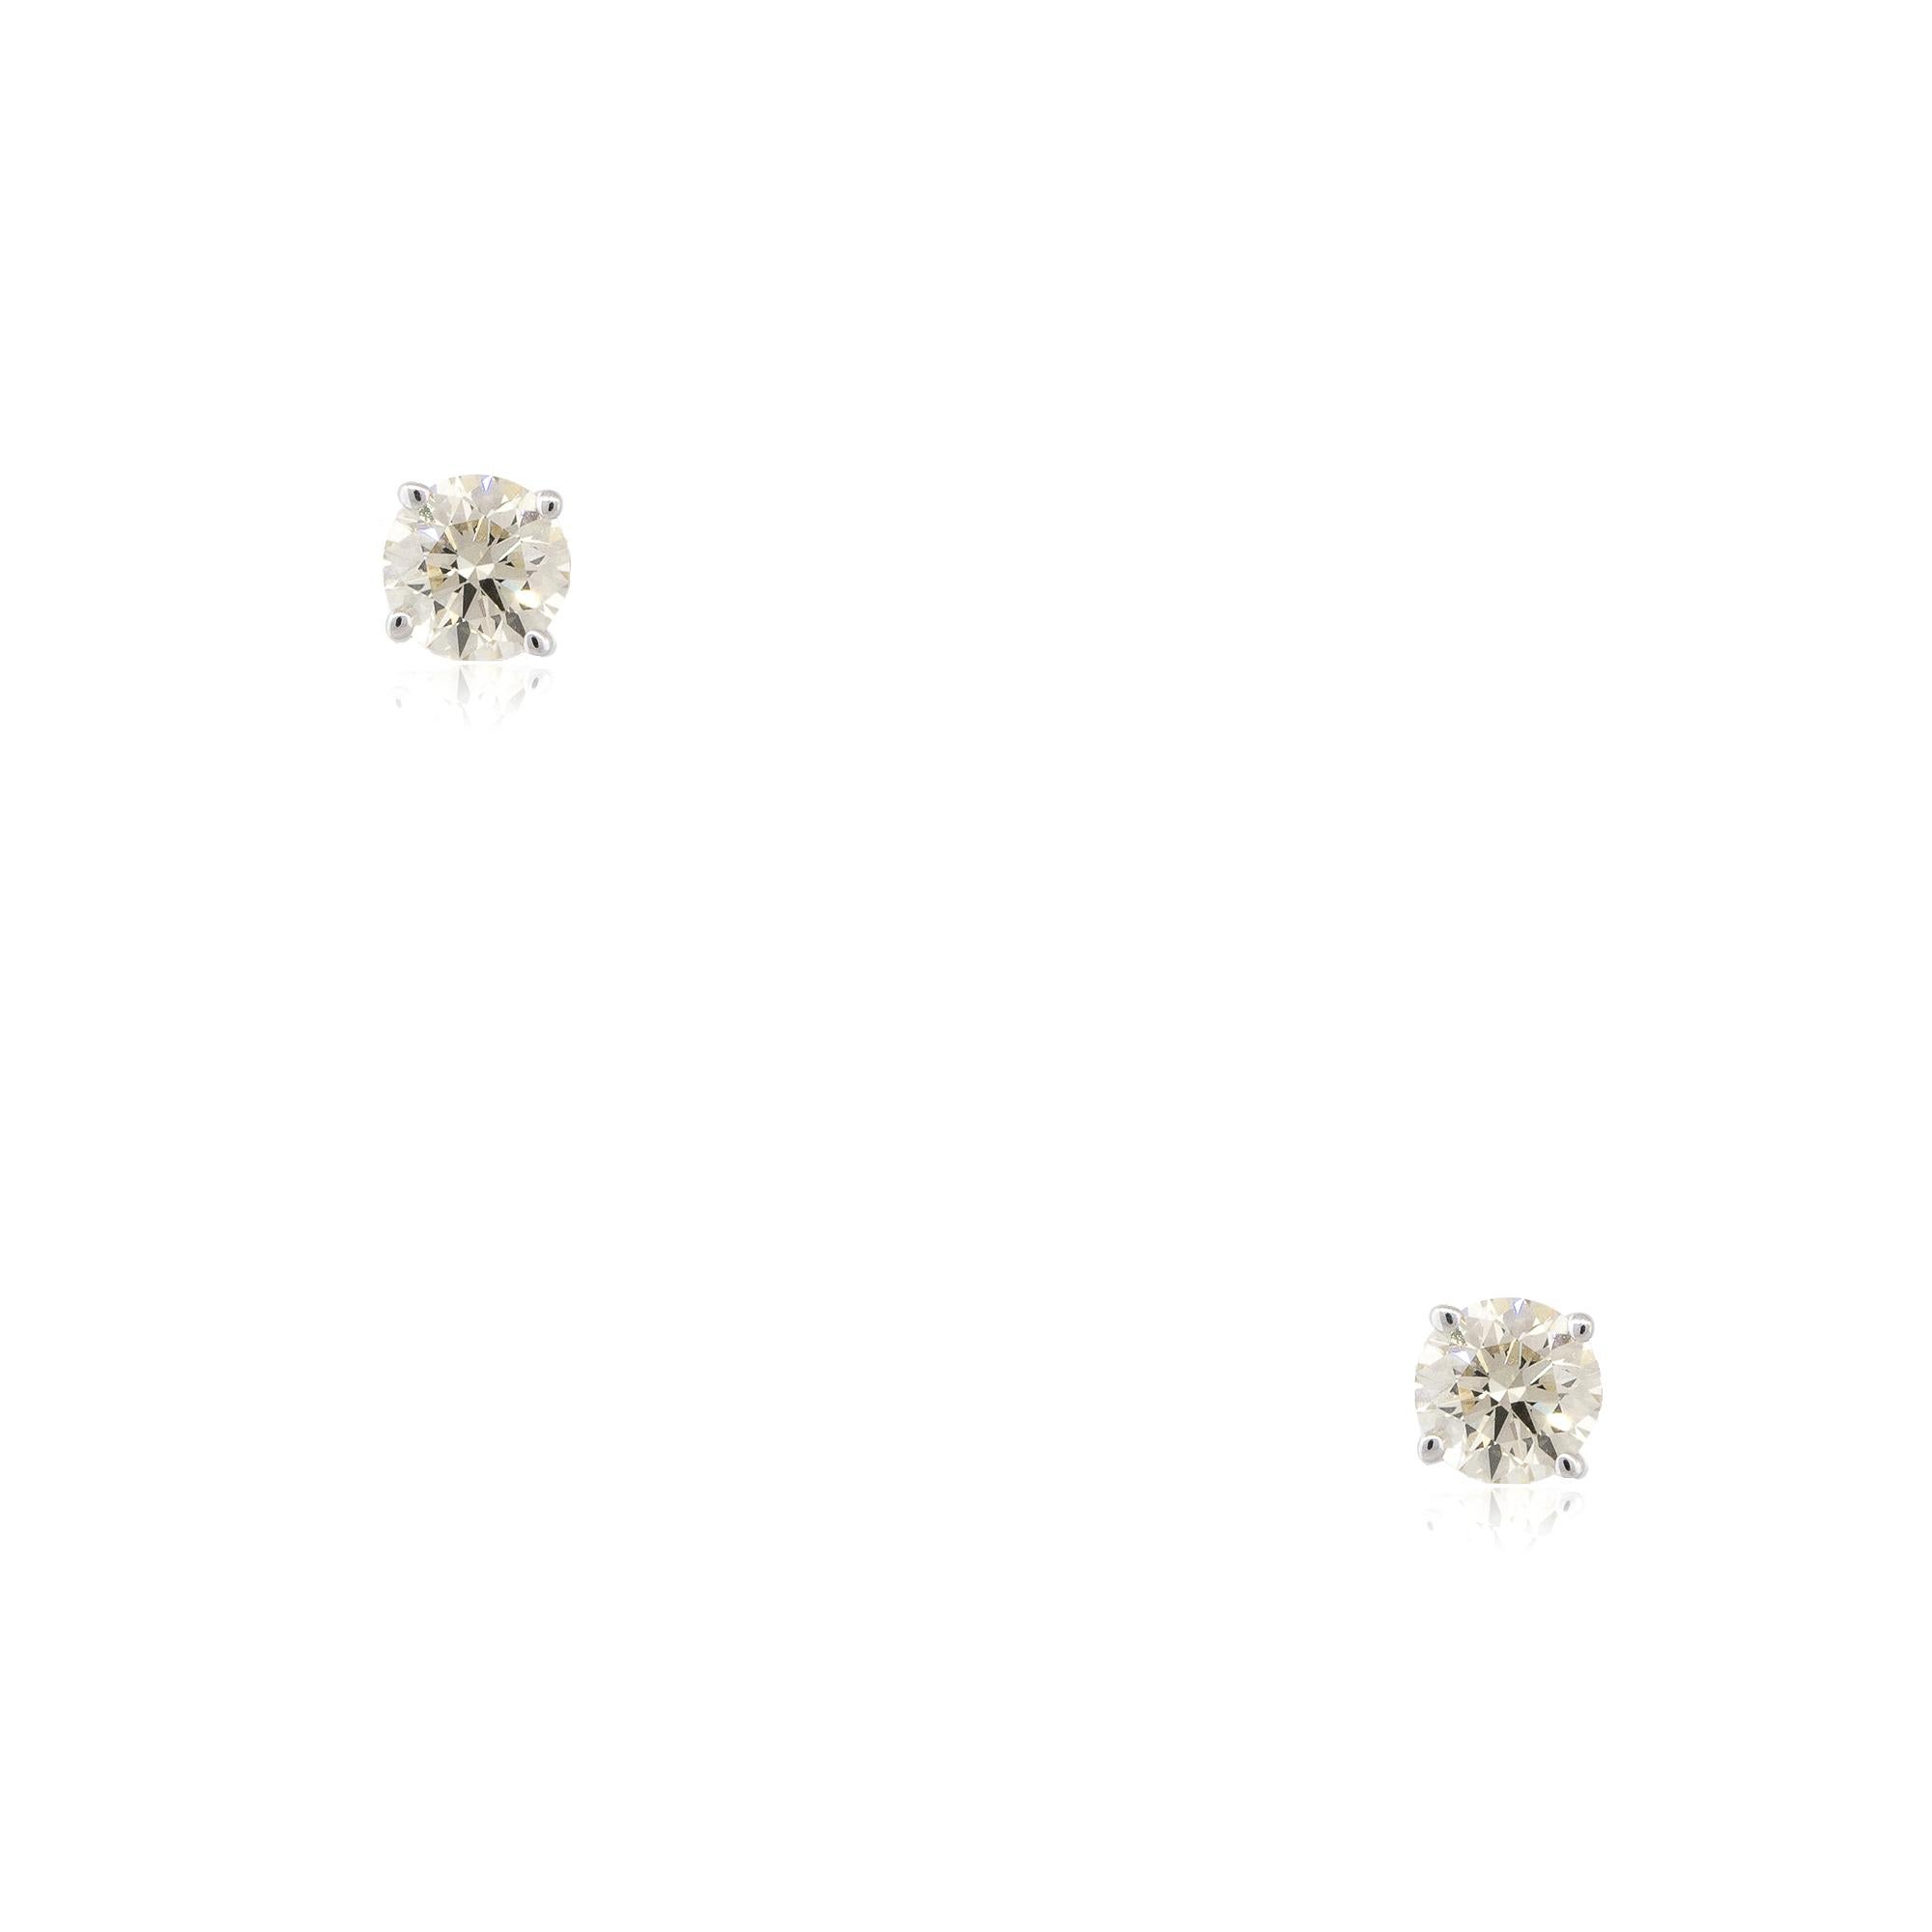 14k White Gold 1.20ctw Diamond Stud Earrings

Material: 14k White Gold
Diamond Details: Main Diamonds are approximately 1.20ctw of Round Brilliant Diamonds. Diamonds are approximately K/L in Color and VS in Clarity
Earring Backs: Friction